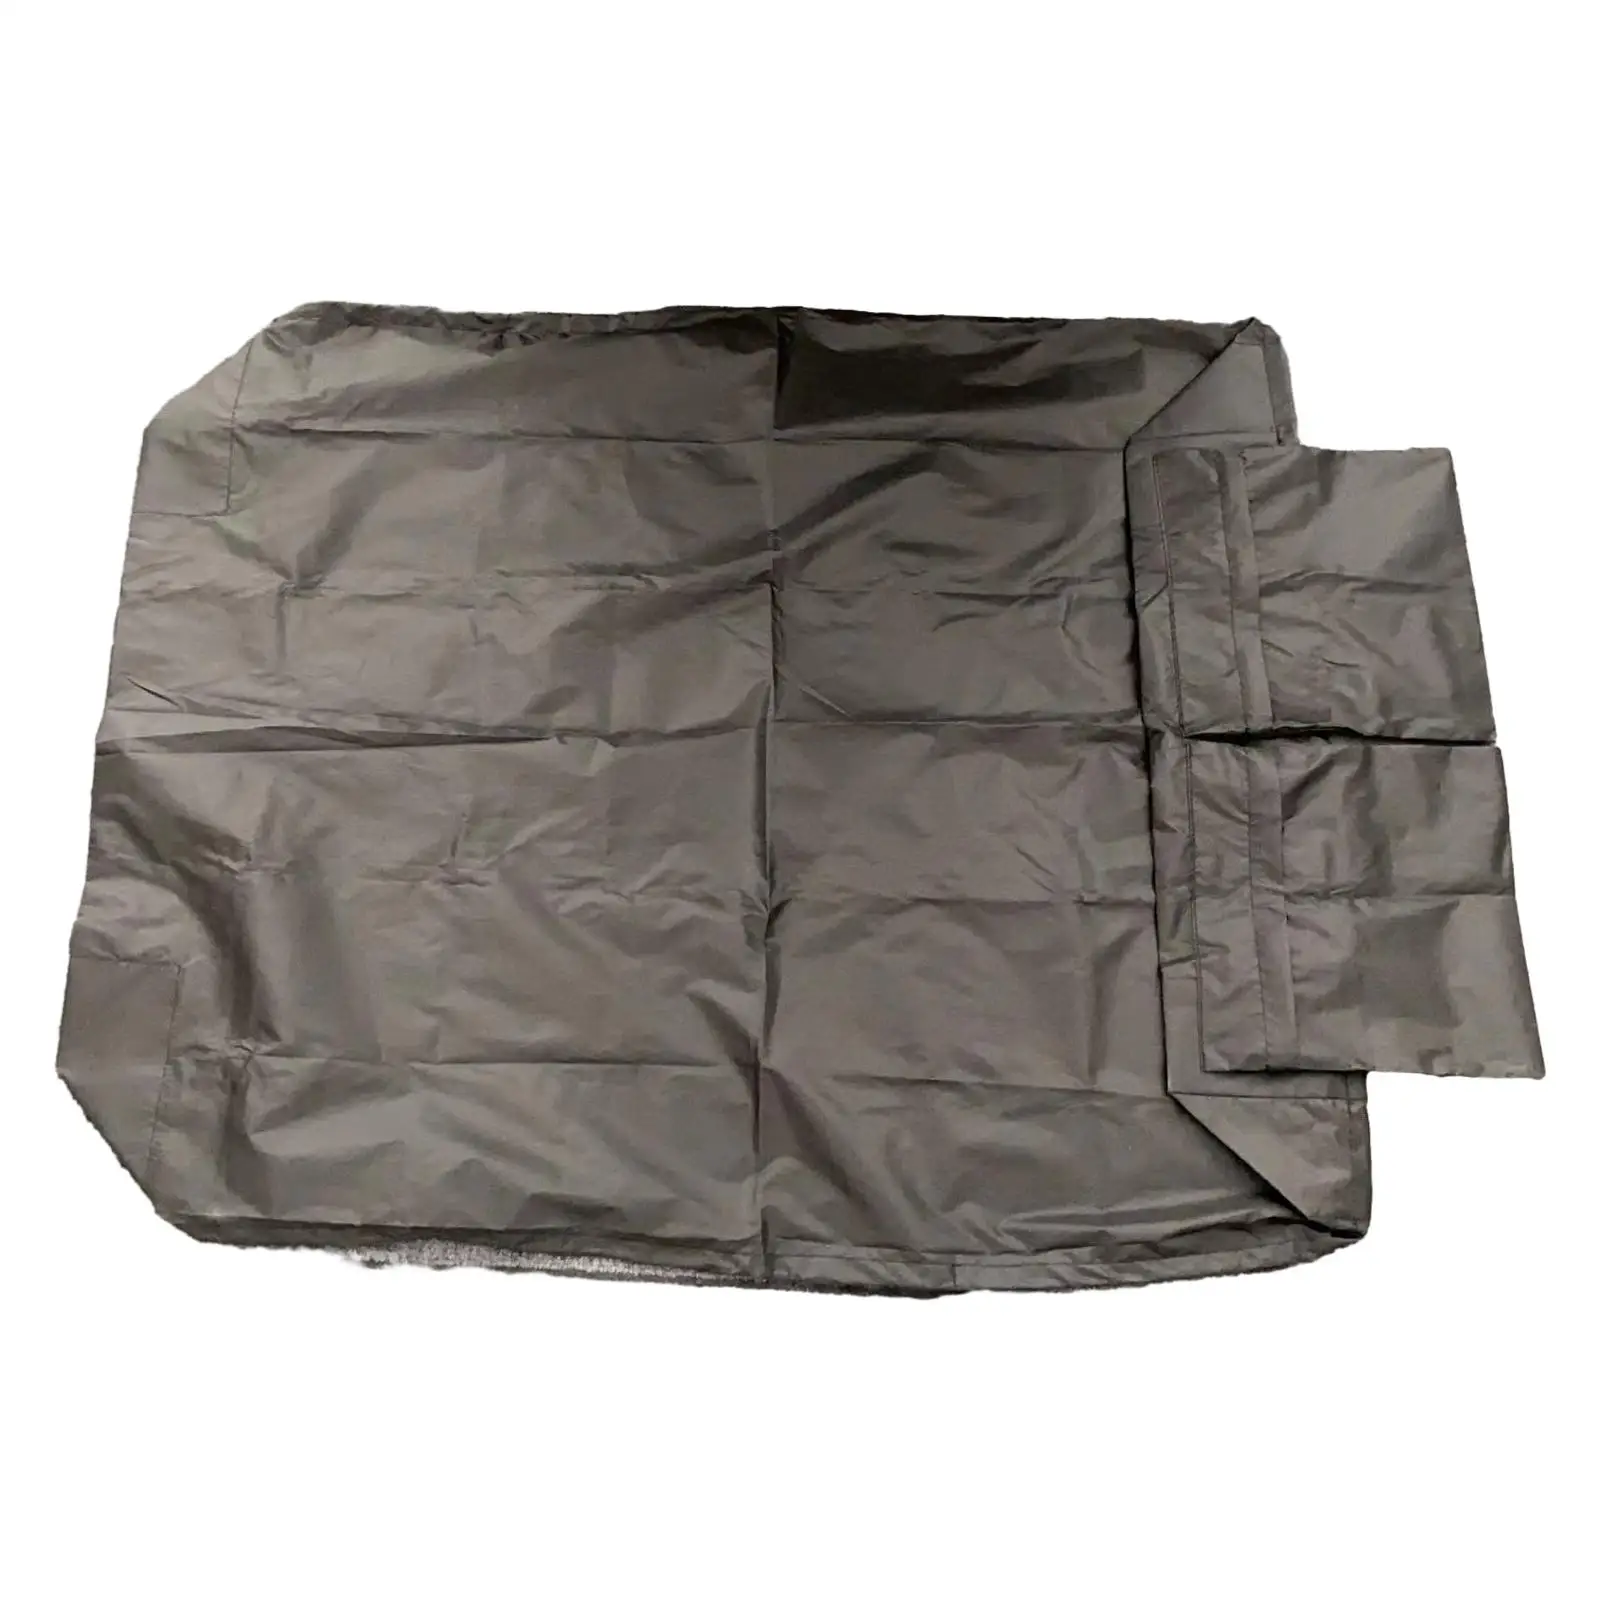 Sandbag Board Dust Cover, Sandbag Board Cover, Regular Size Oxford Cloth, Entertainment Game Equipment Cover Protective Cover